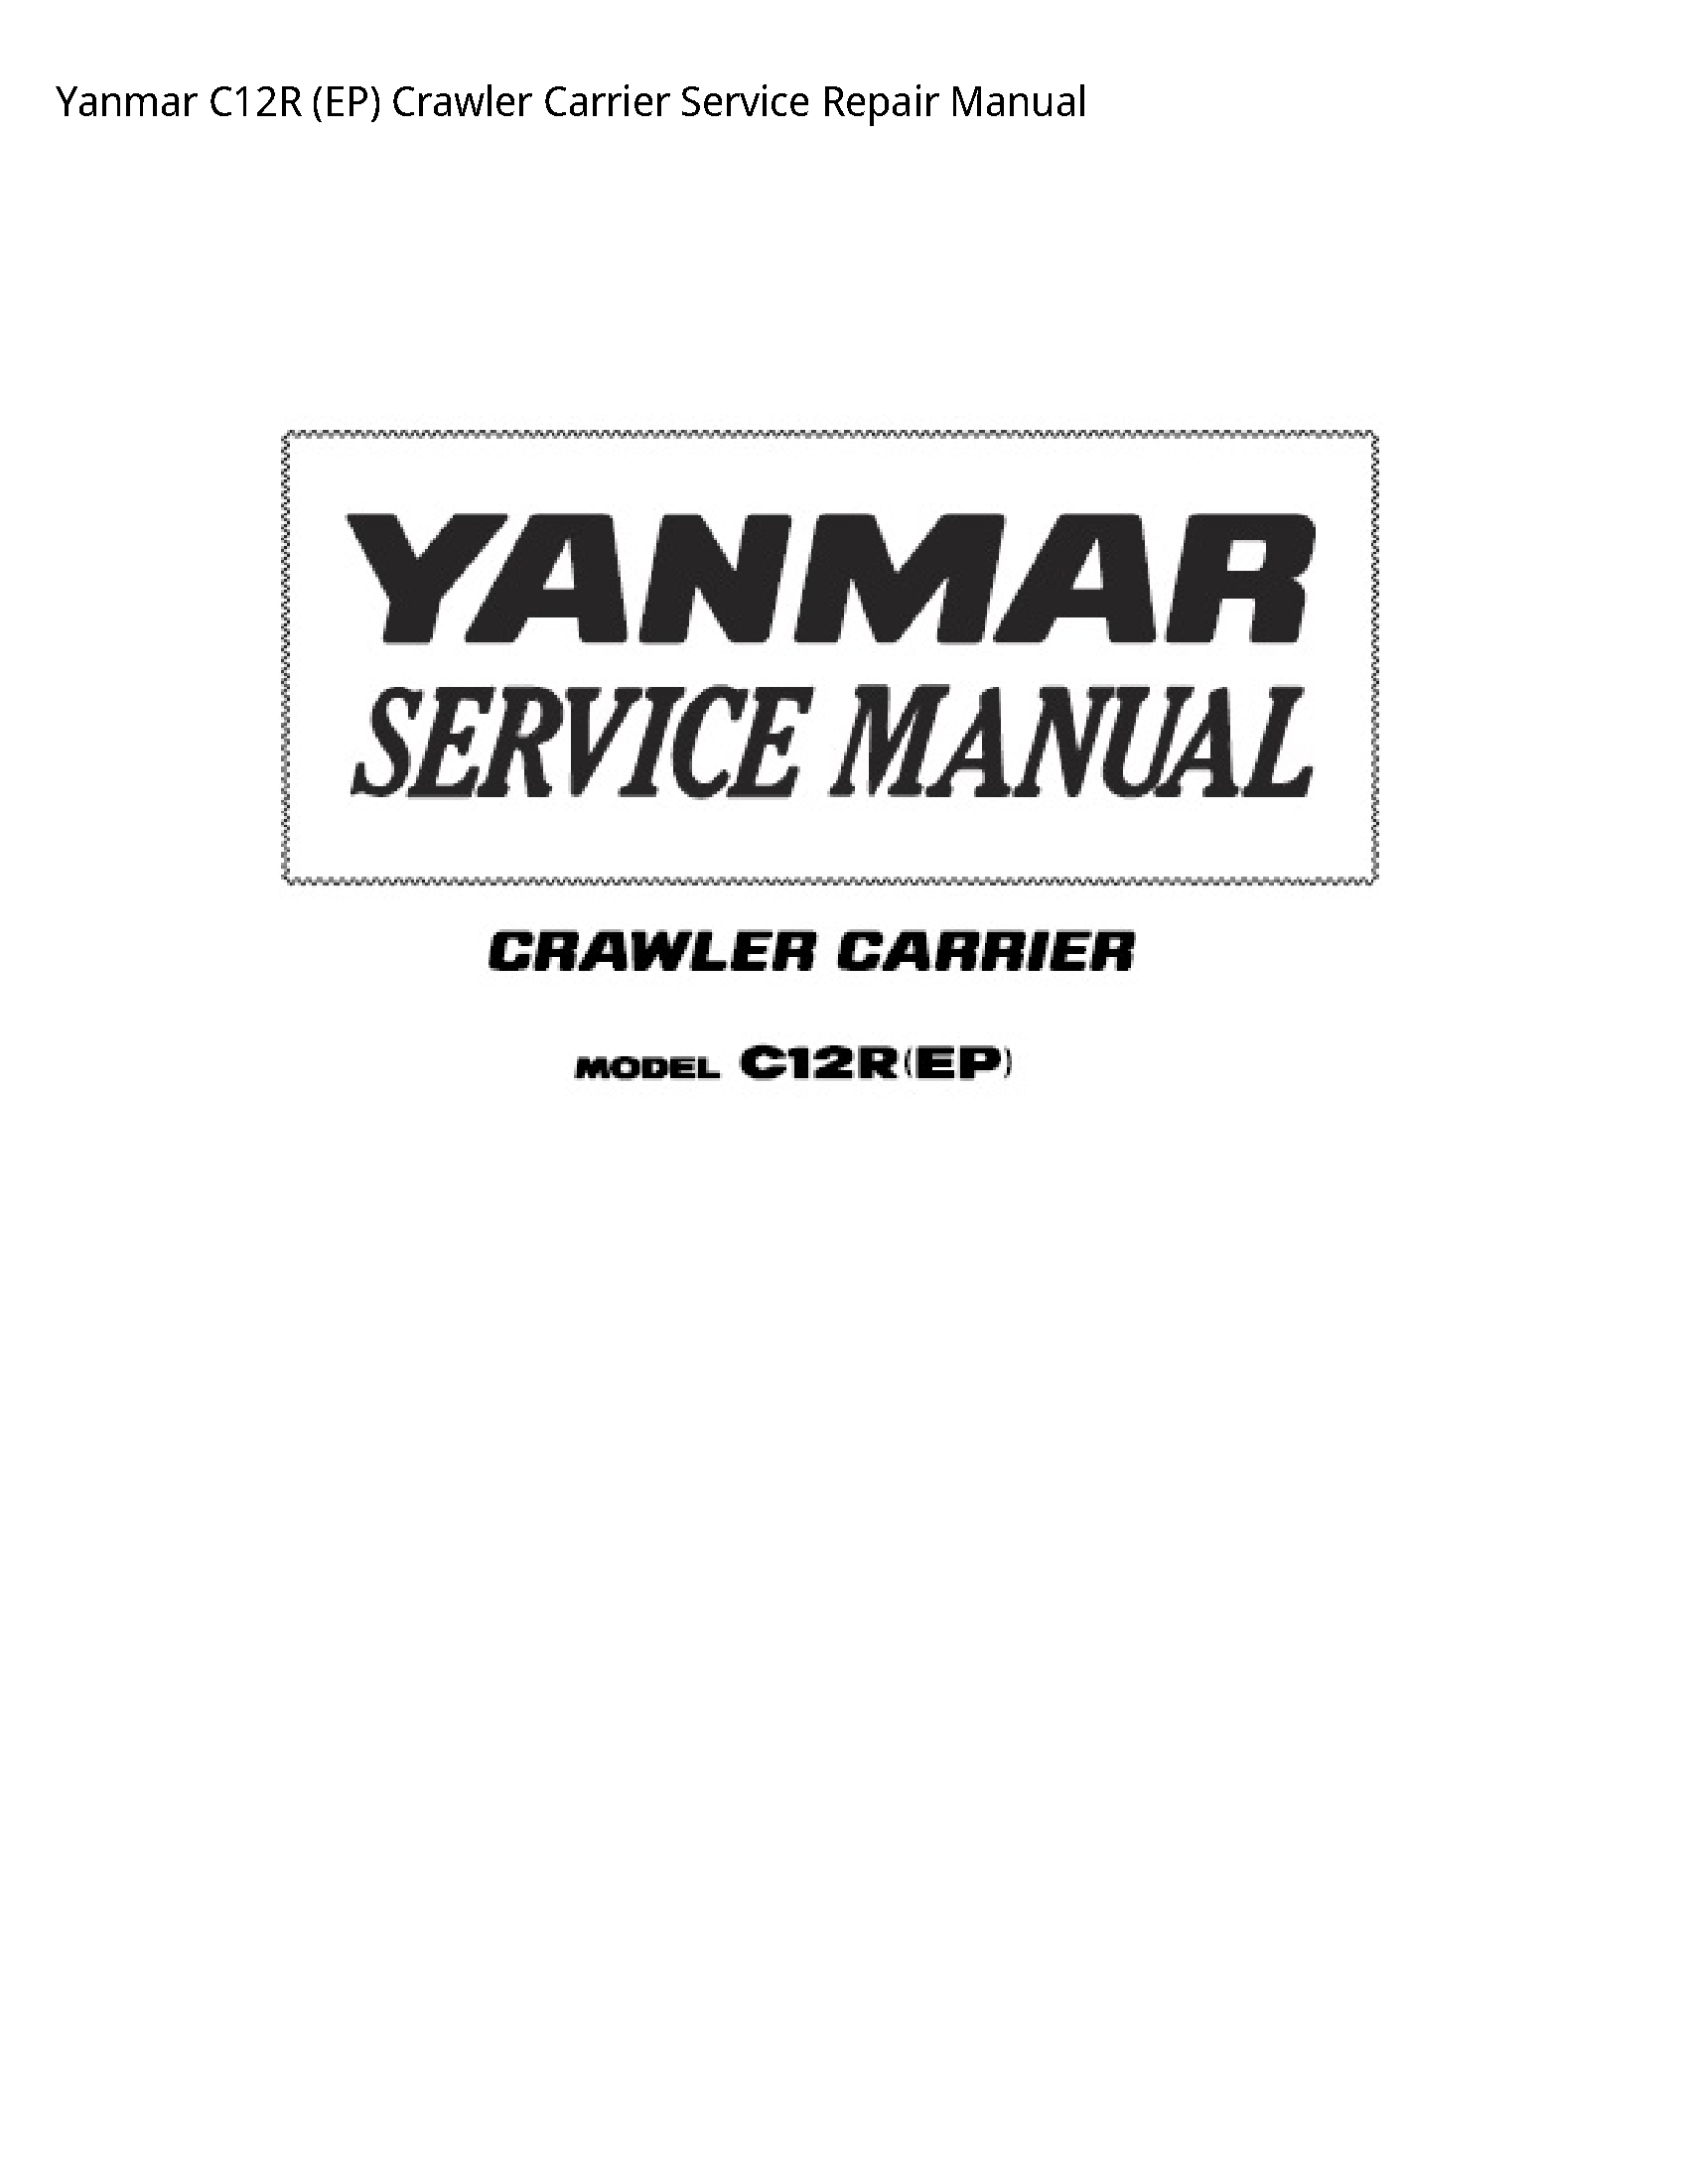 Yanmar C12R (EP) Crawler Carrier manual